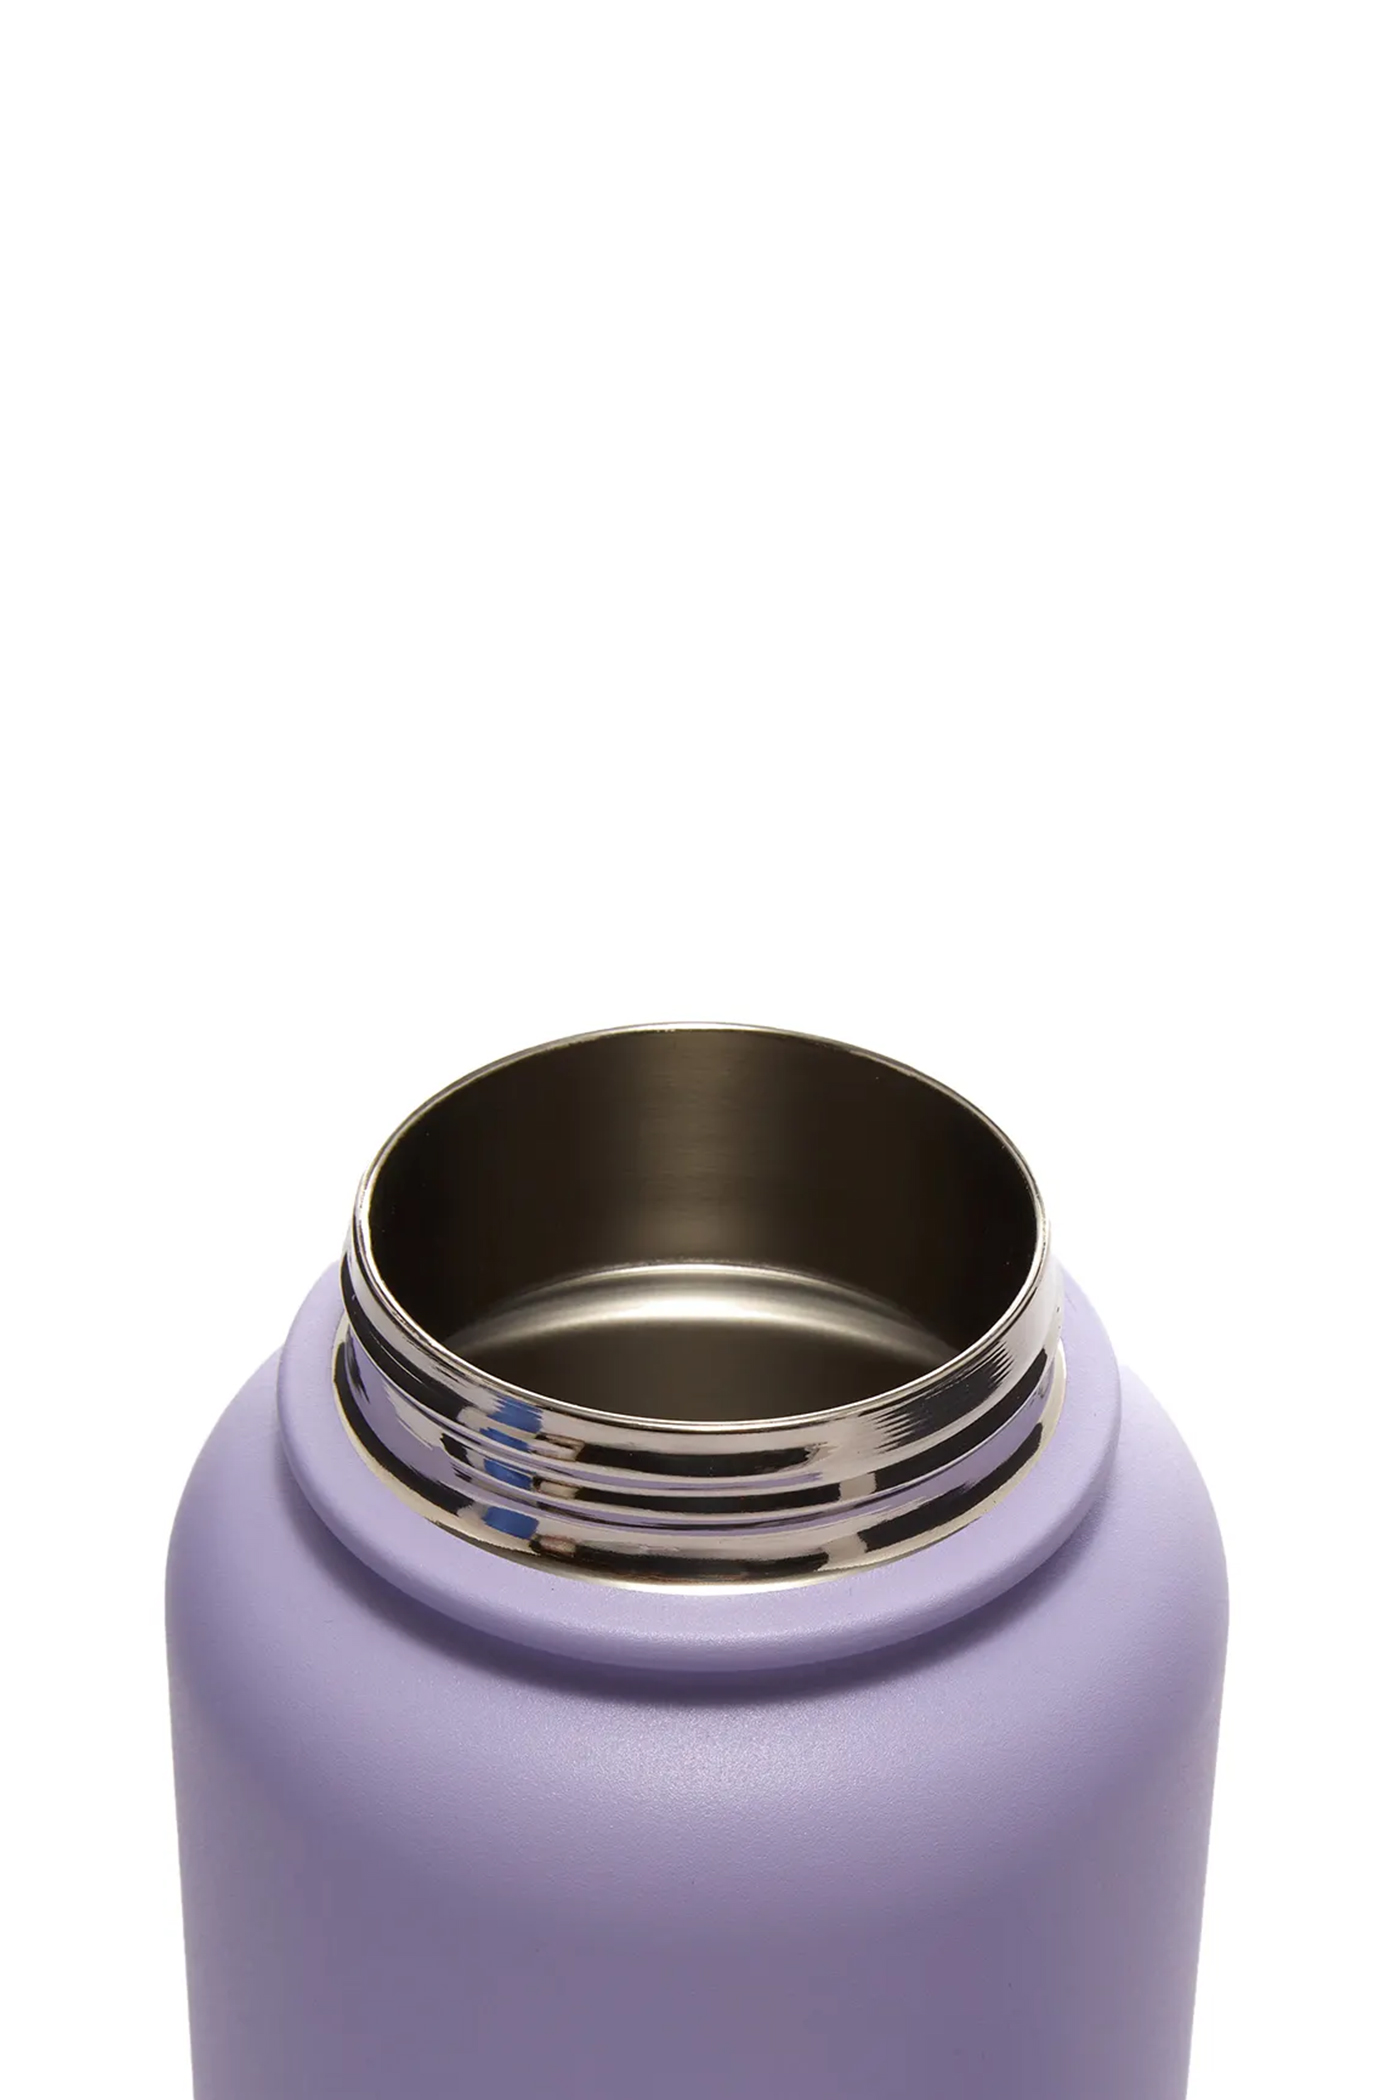 HAY Mono thermal bottle 0,6 L, lavender